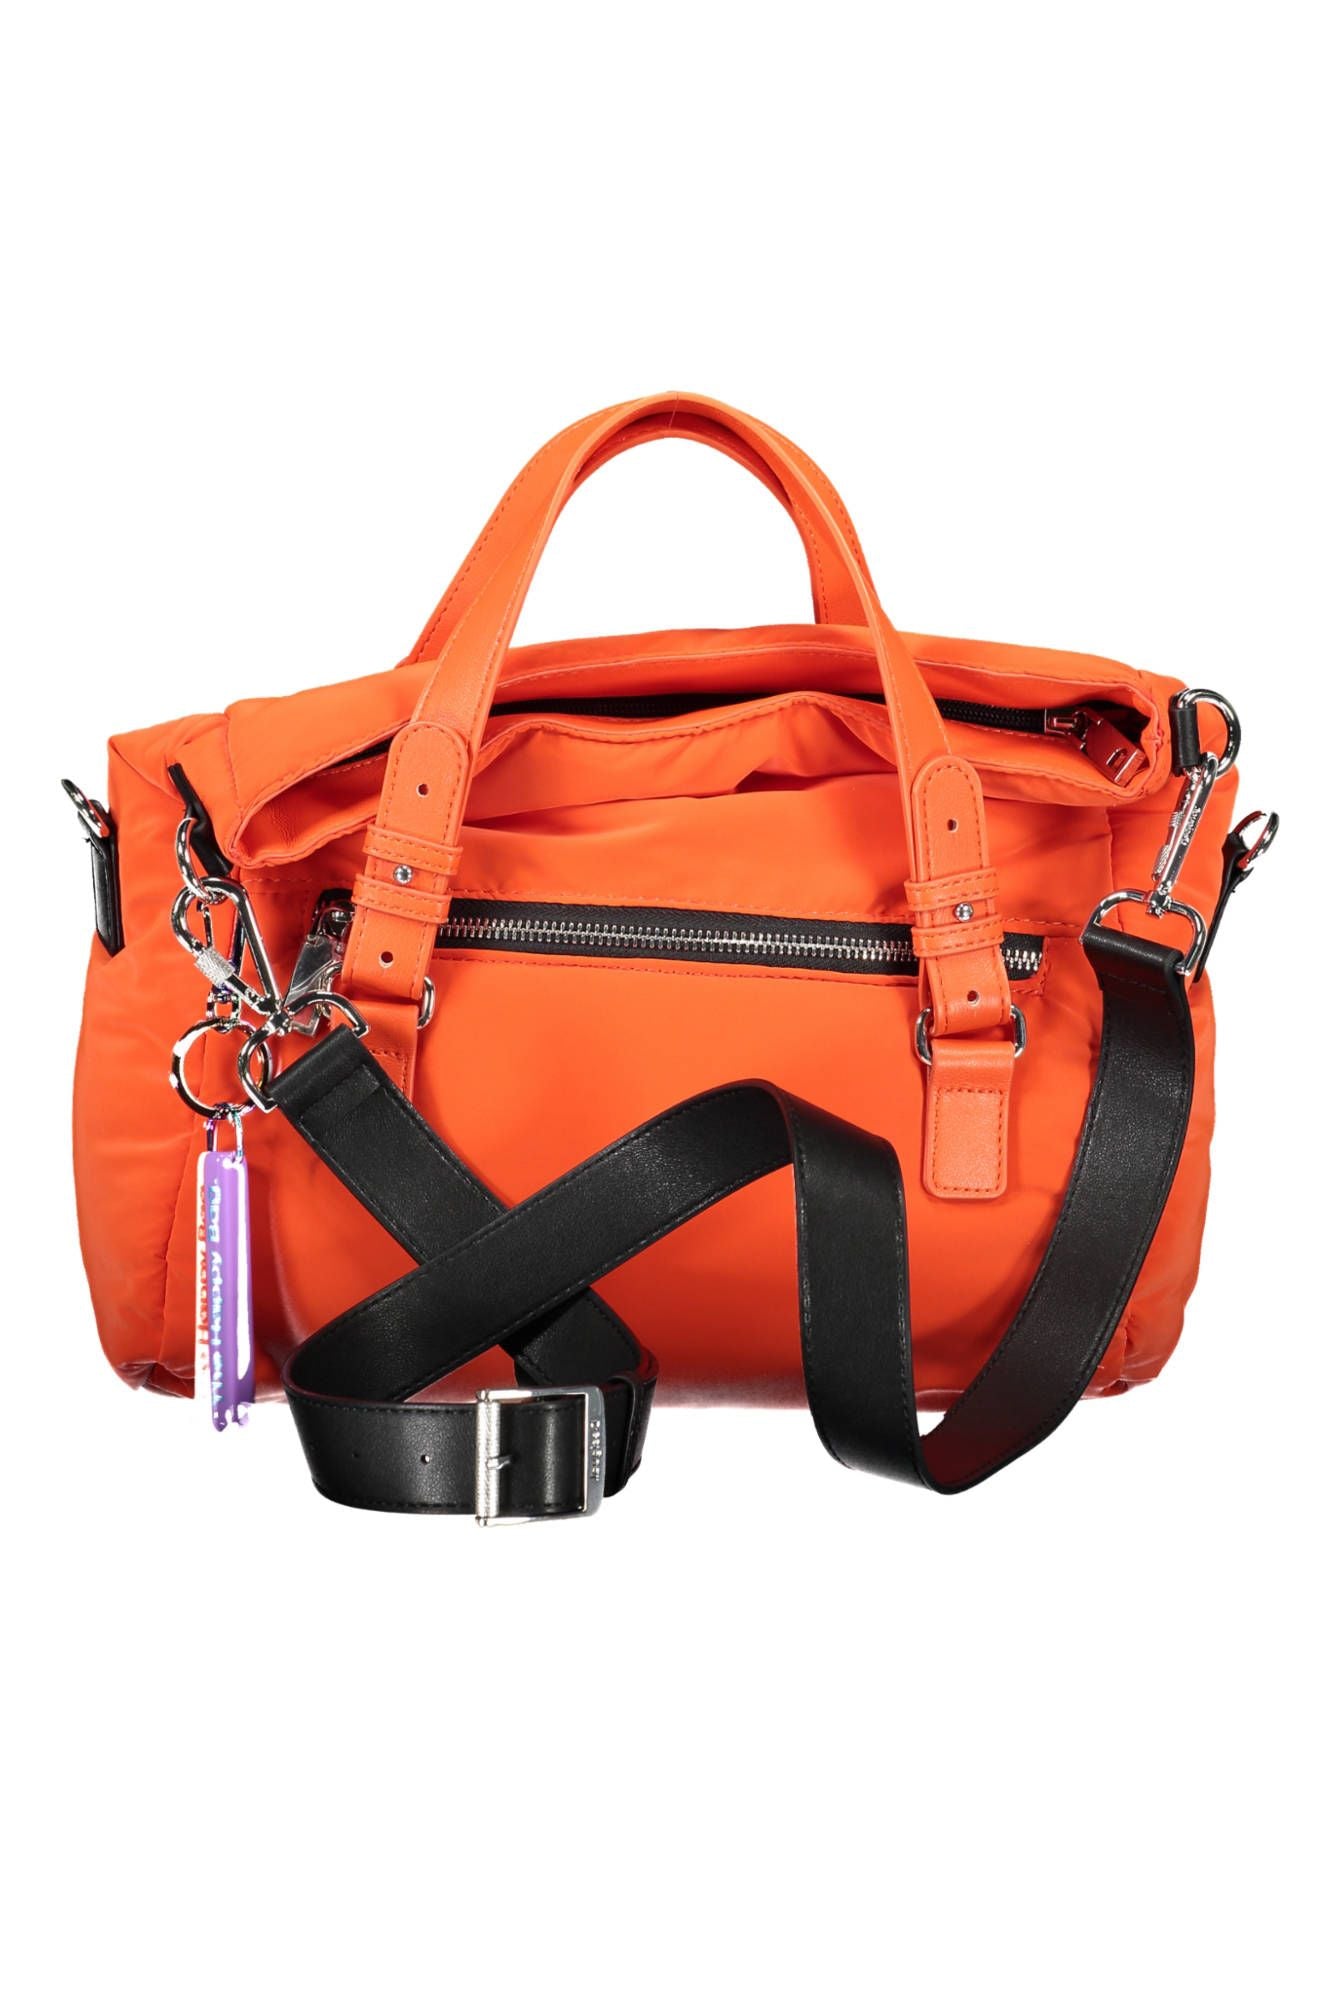 Vibrant Orange Polyester Handbag with Versatile Straps